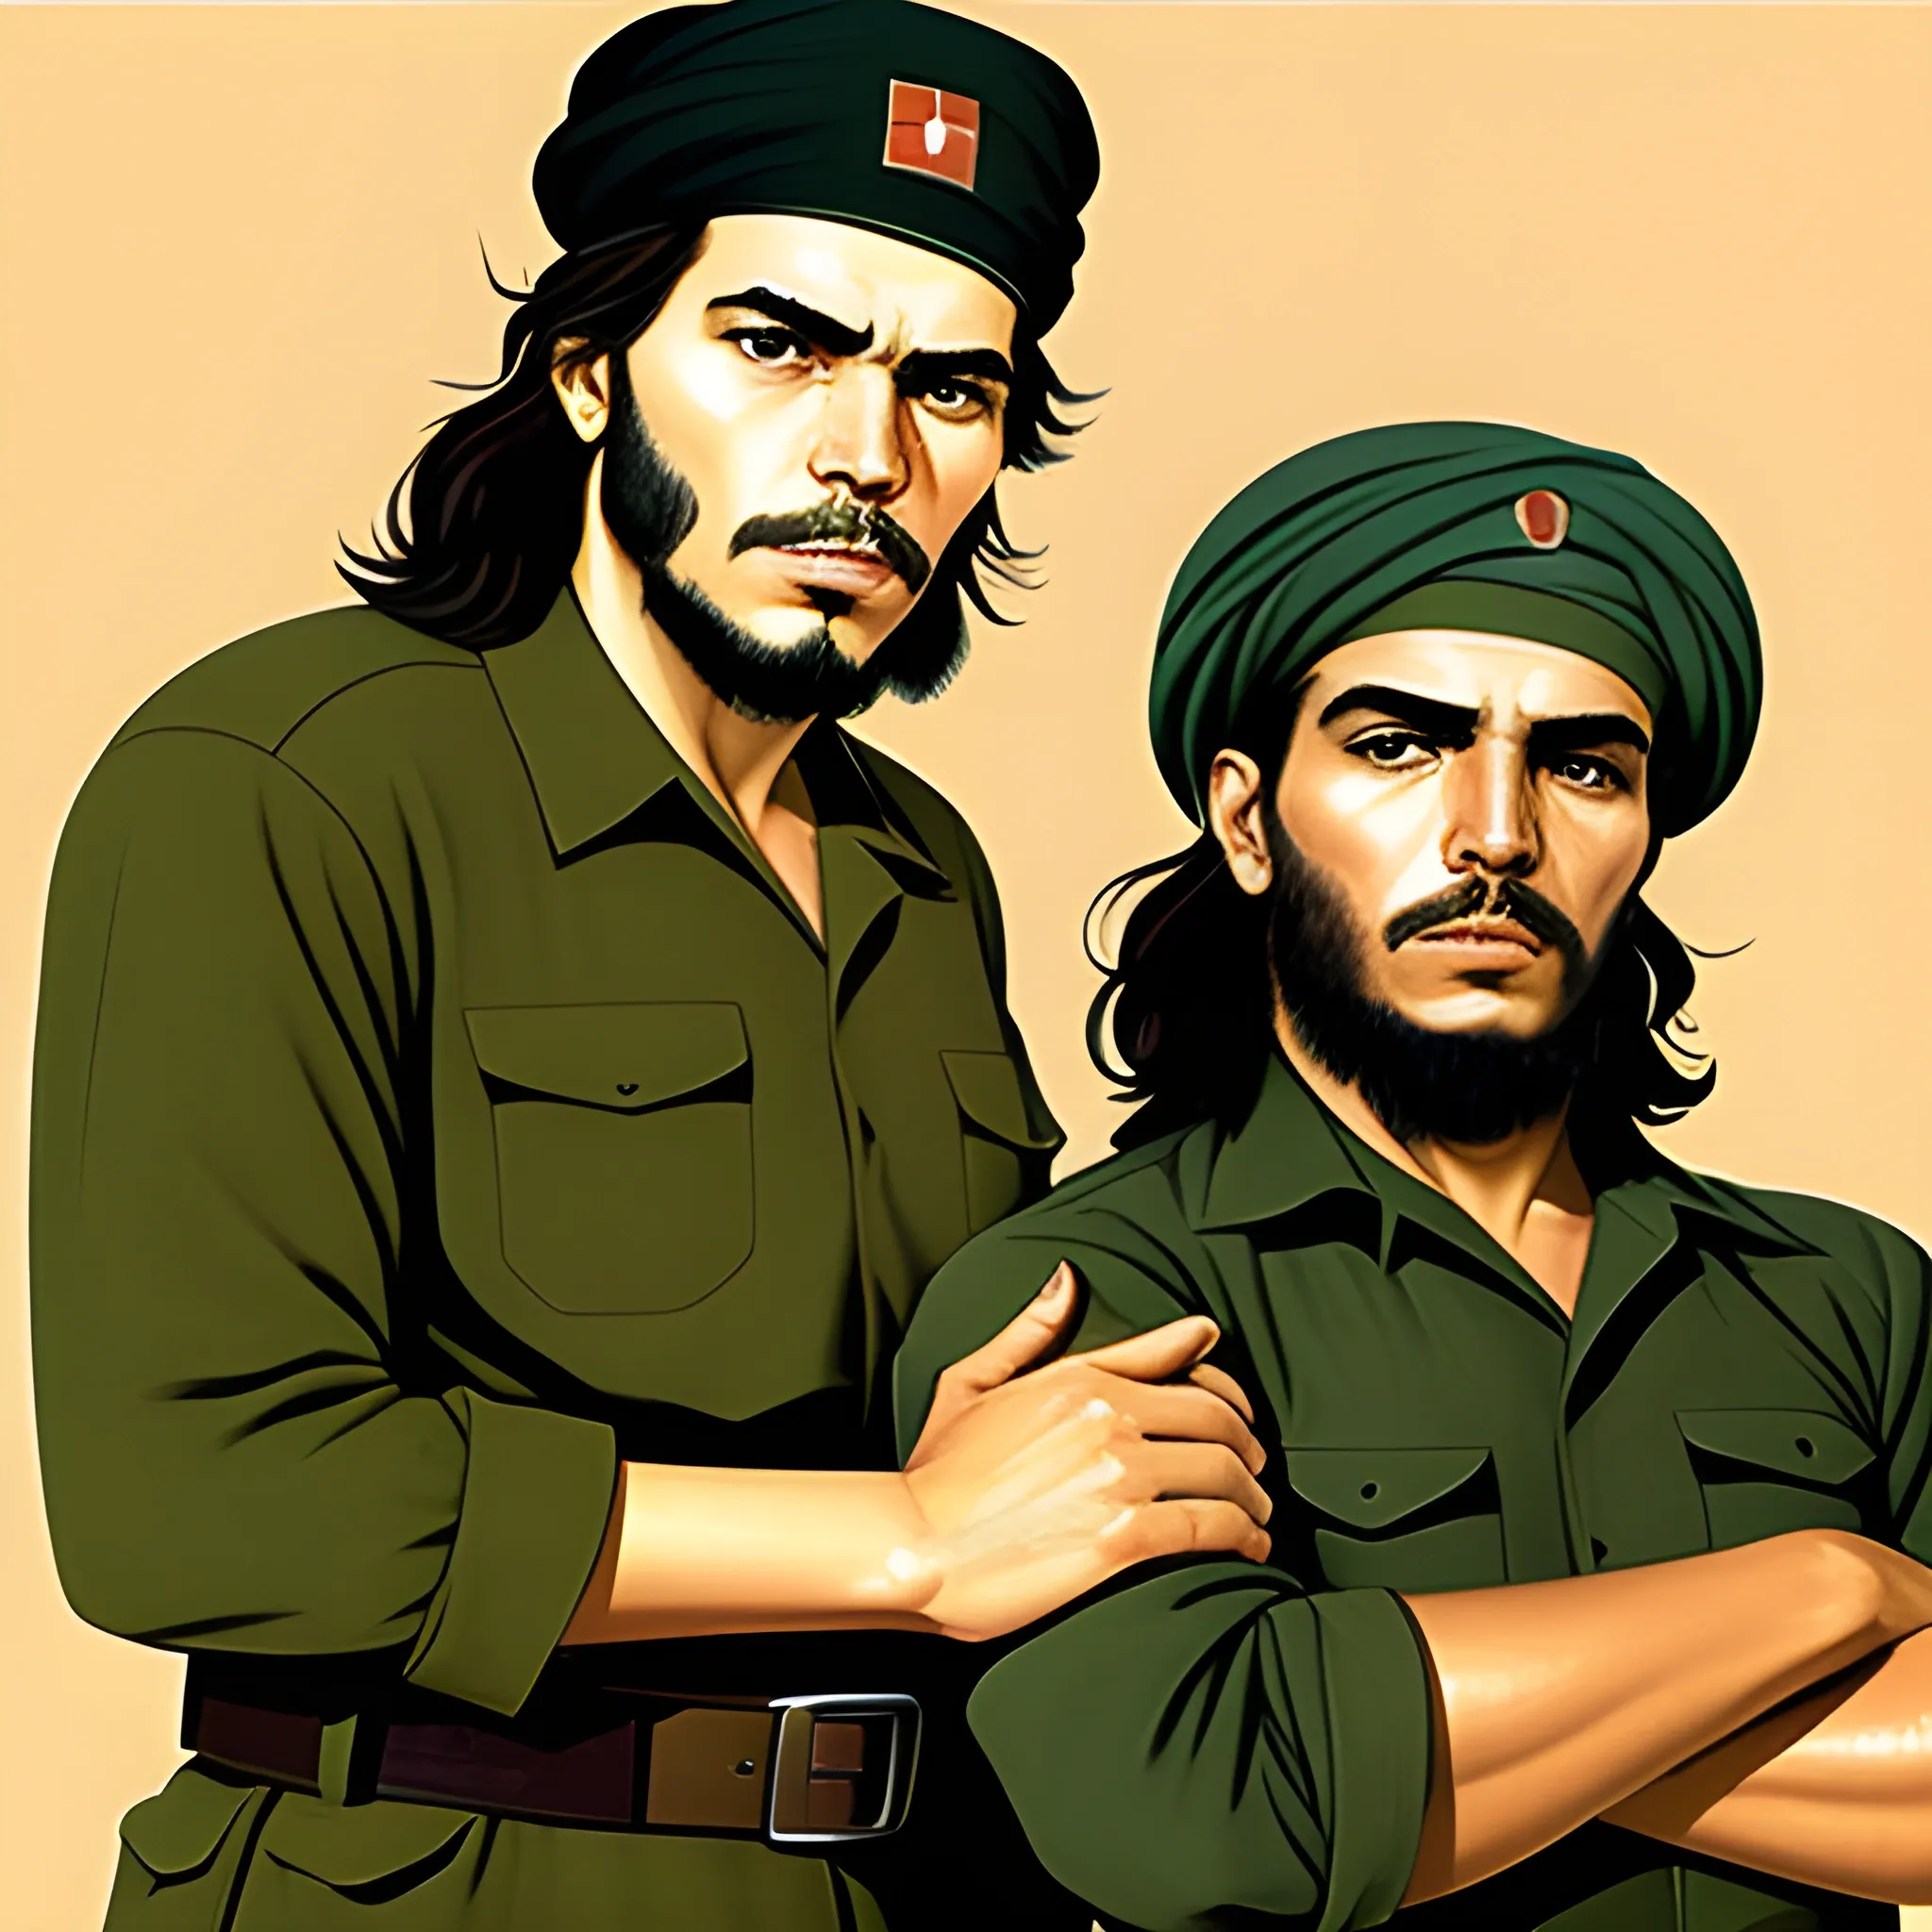 Che Guevara image.eps Royalty Free Stock SVG Vector